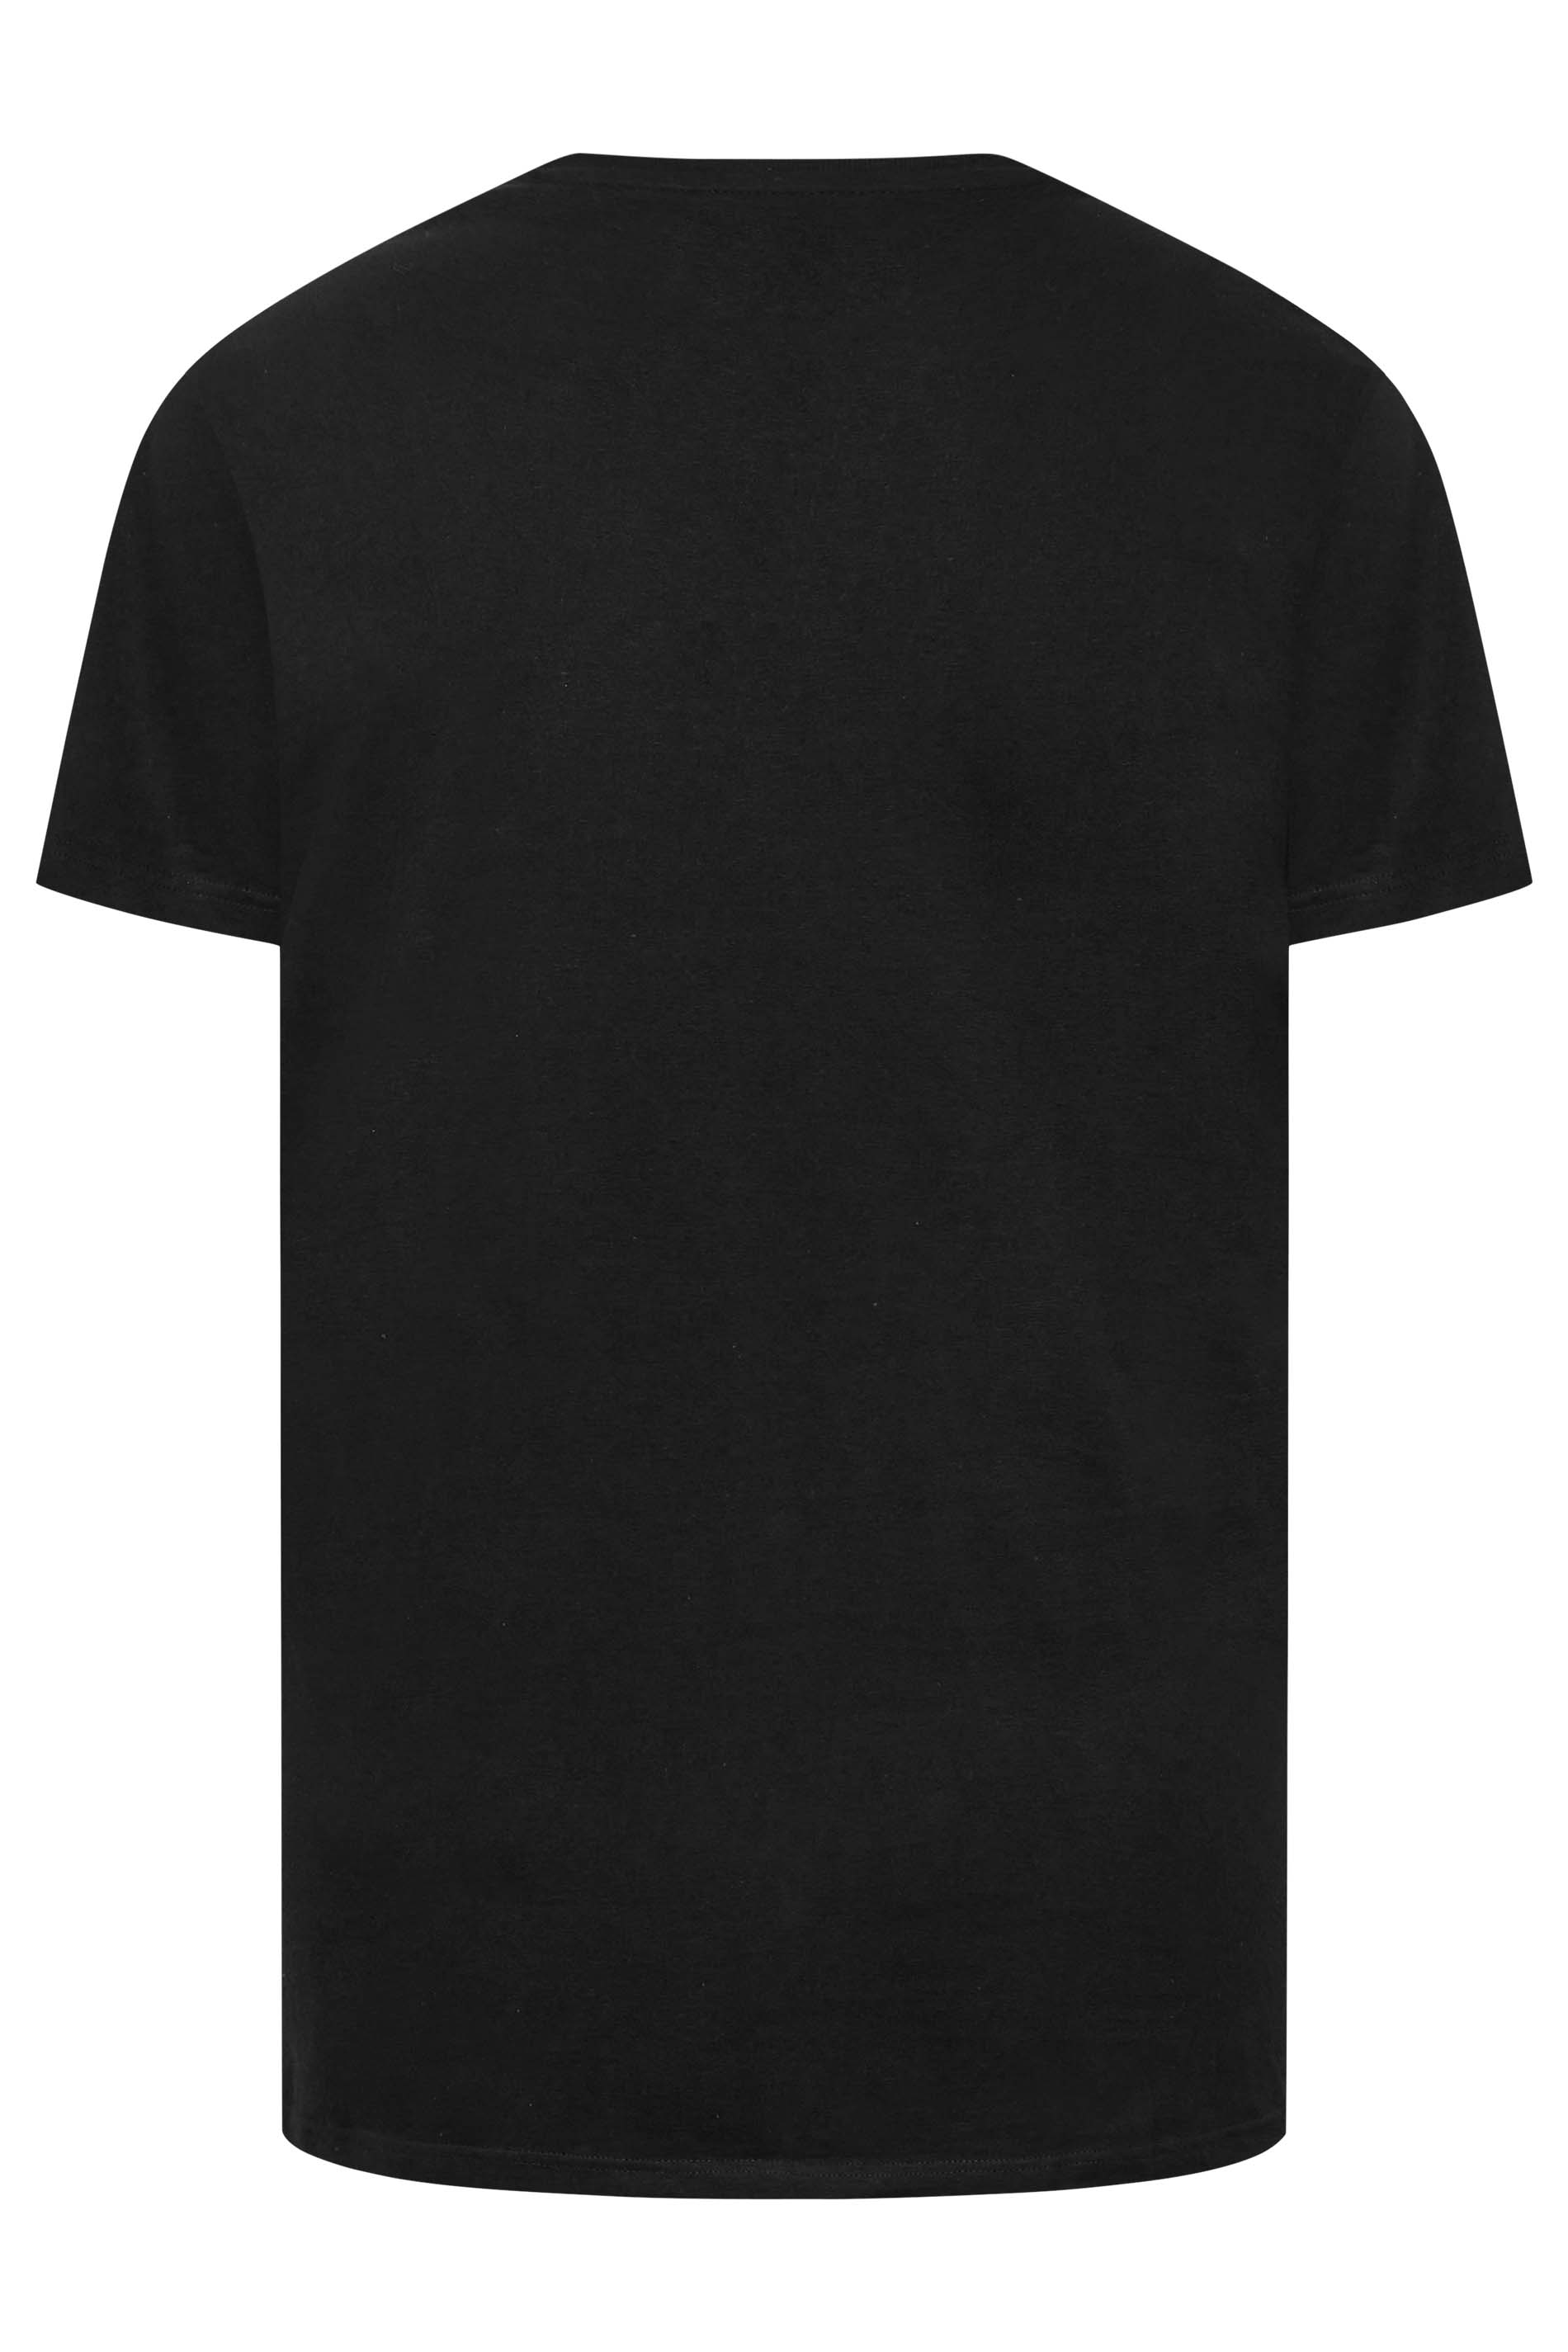 BadRhino Big & Tall Black X-Ray Skull Print T-Shirt | BadRhino  3